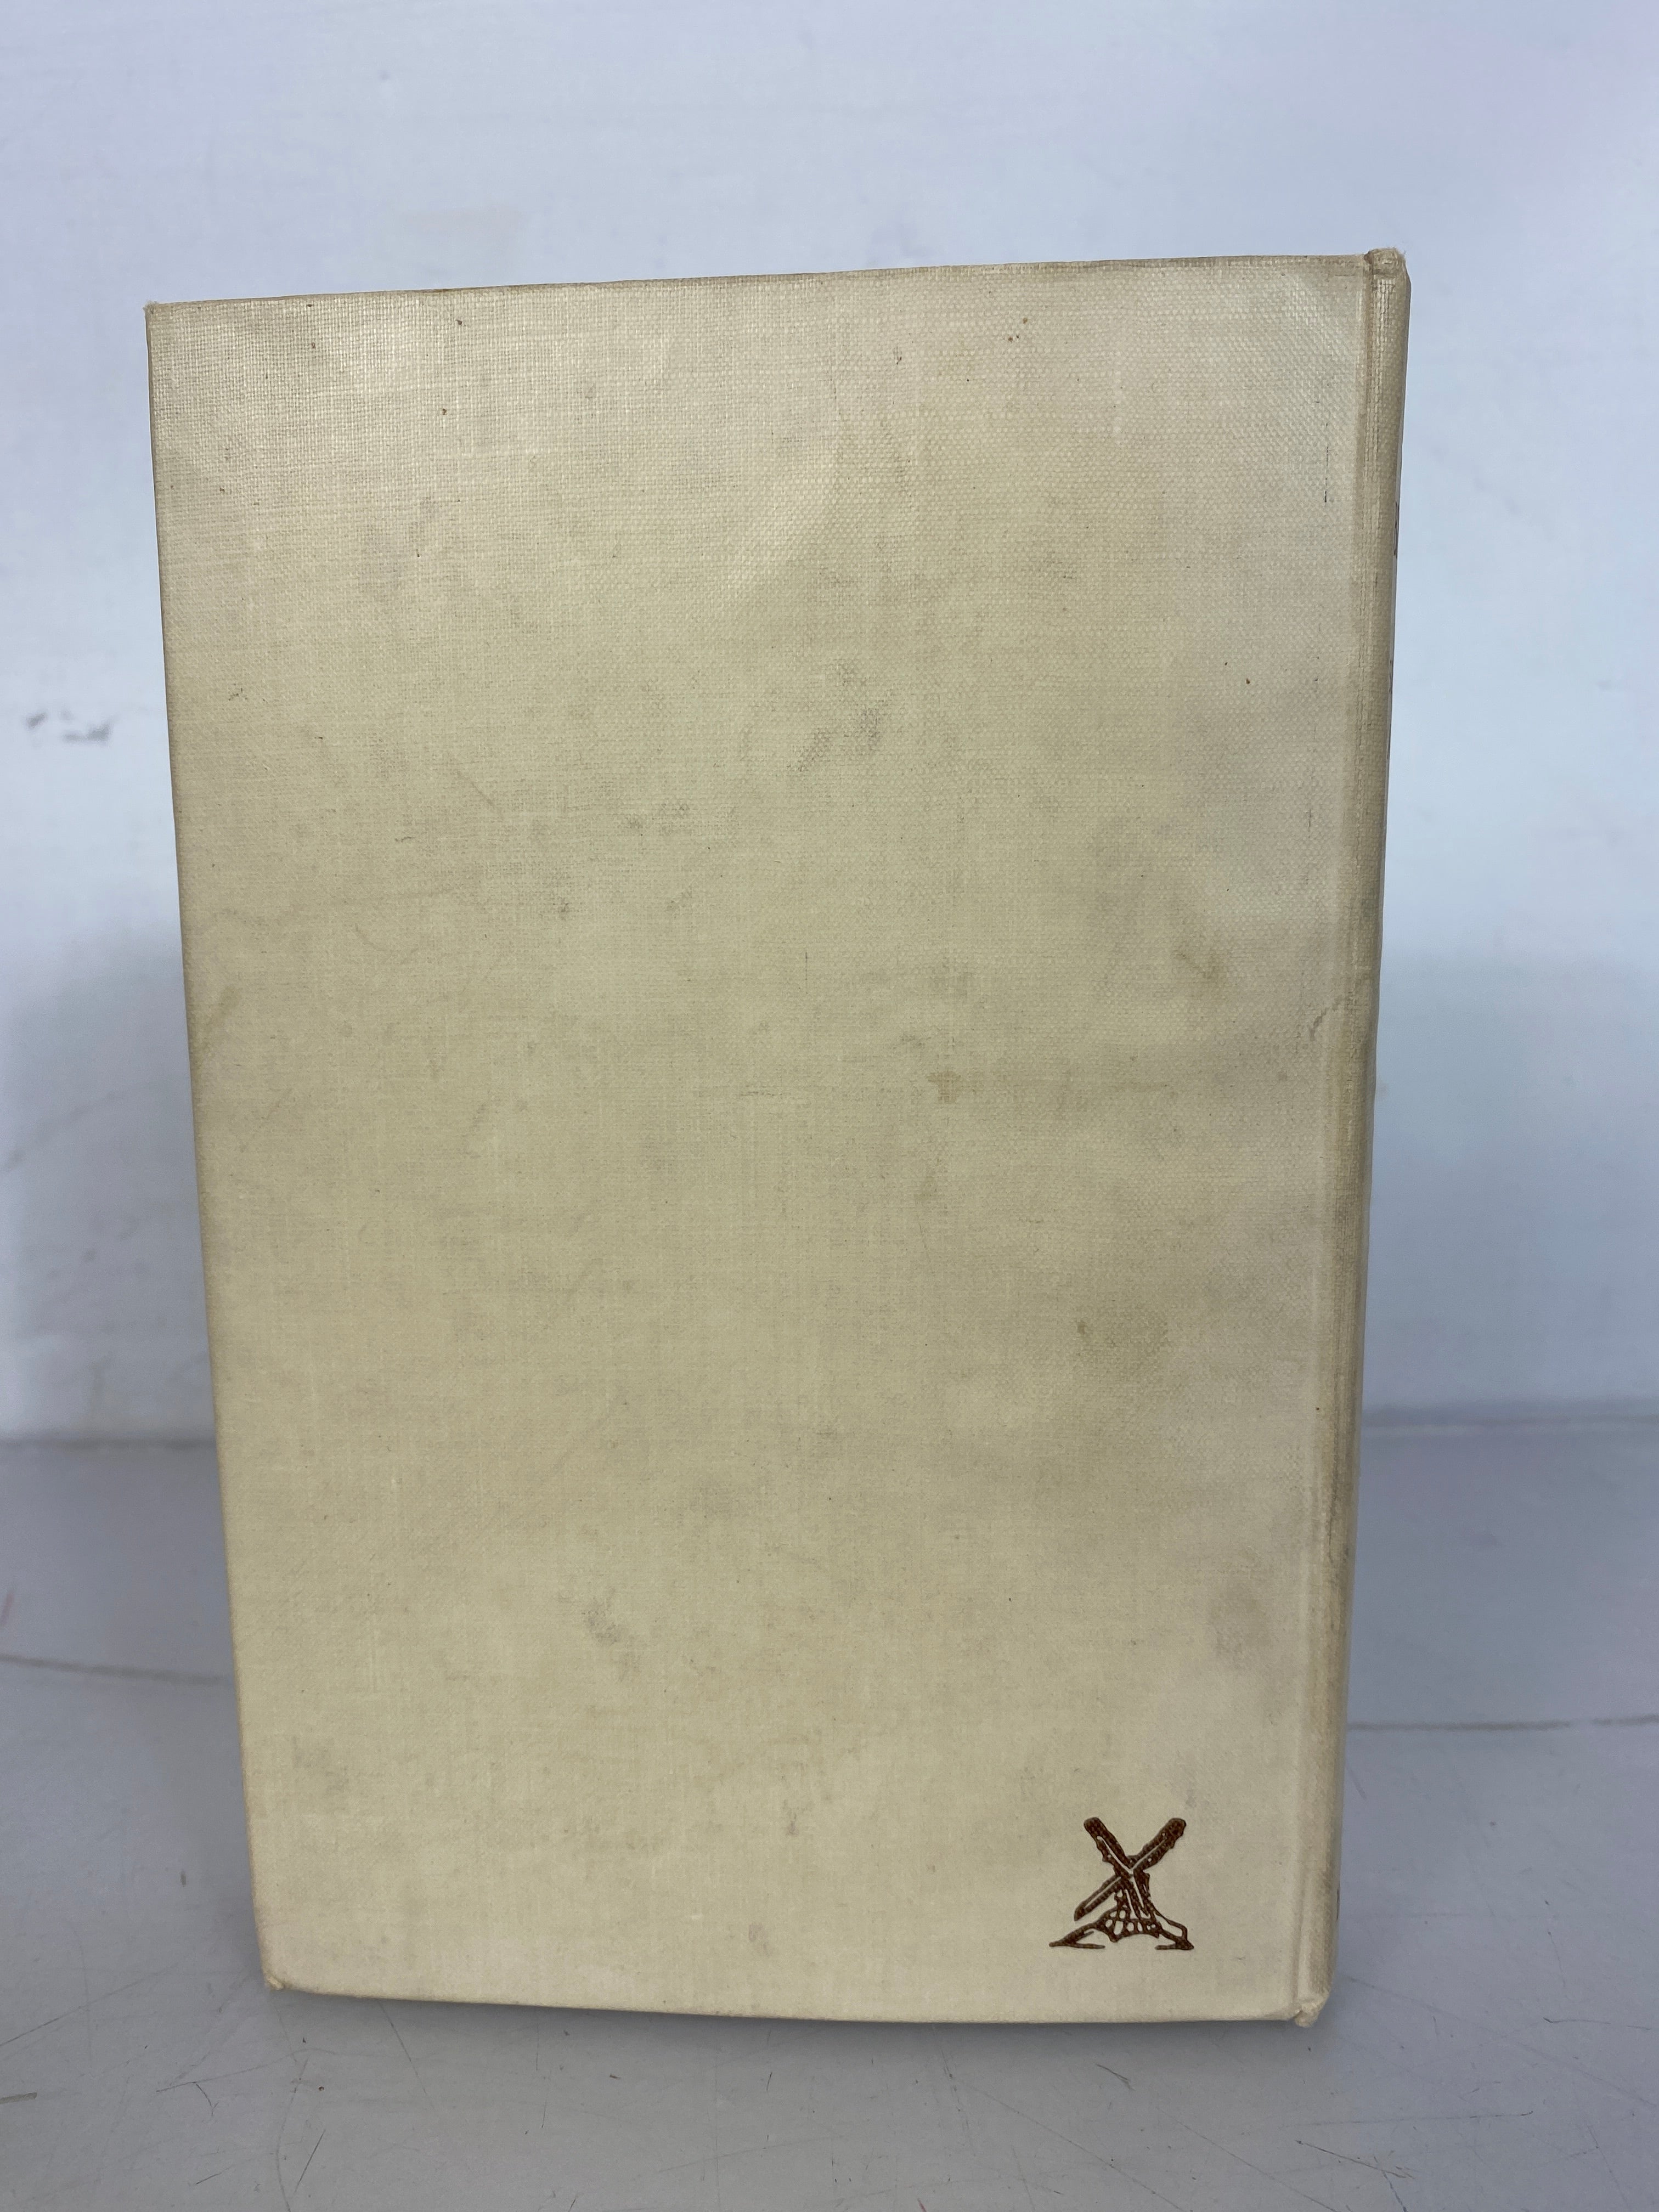 Sarah Bernhardt First Edition 1923 C by George Arthur HC